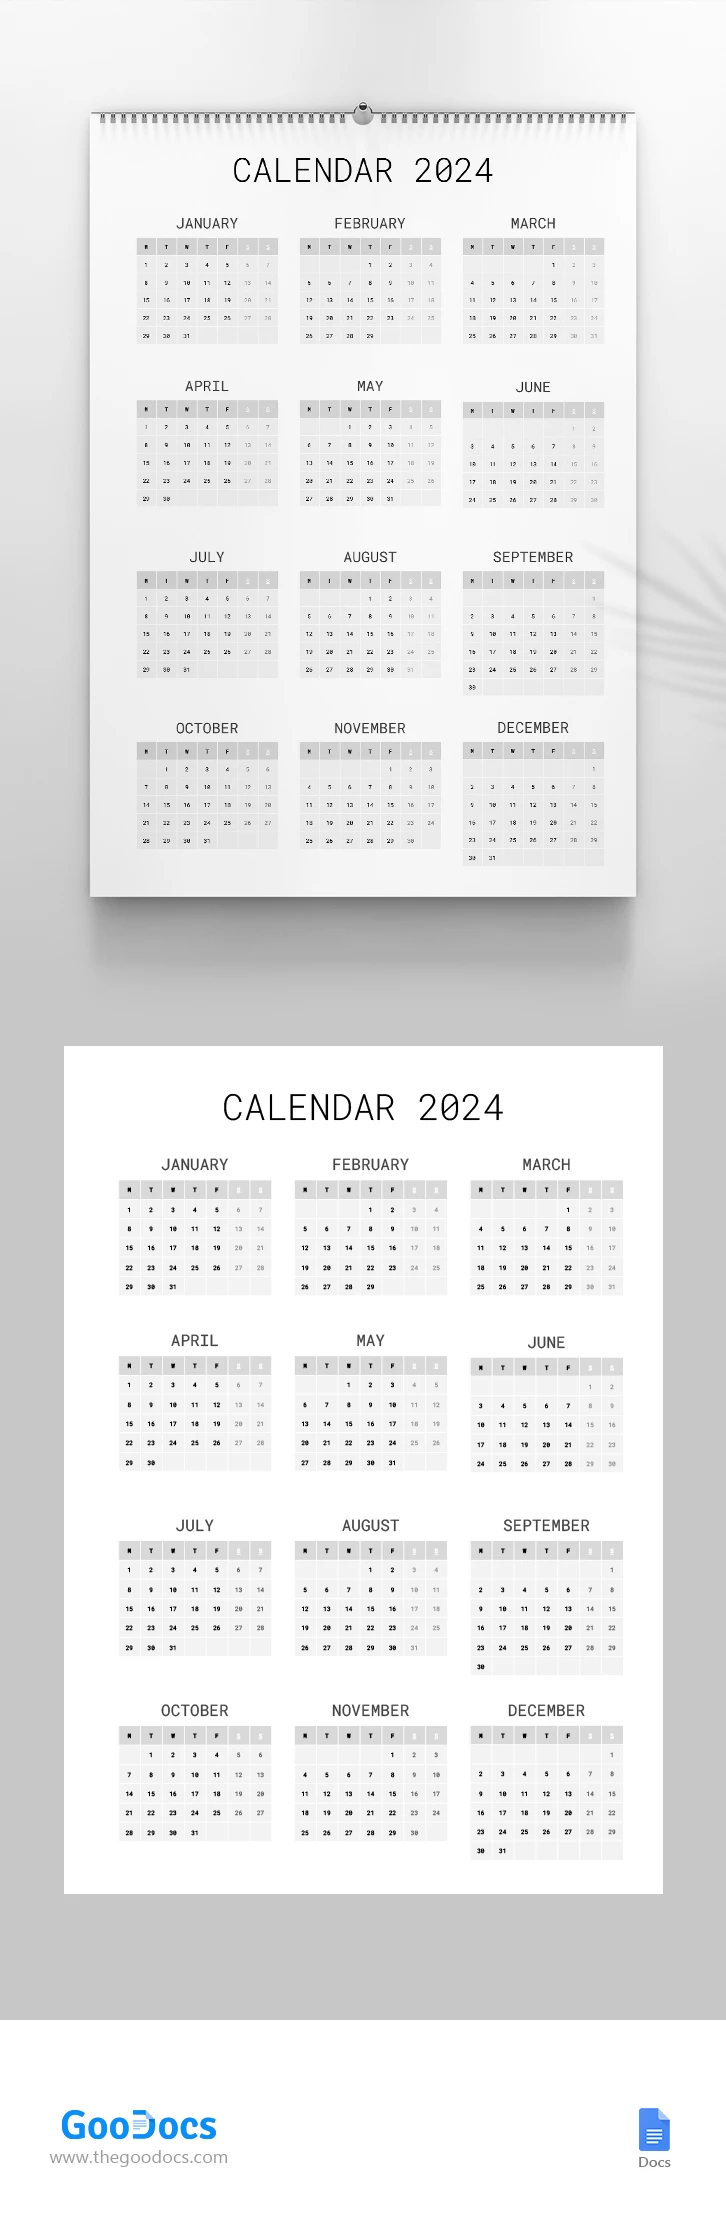 Calendario Anual 2024 - free Google Docs Template - 10068199